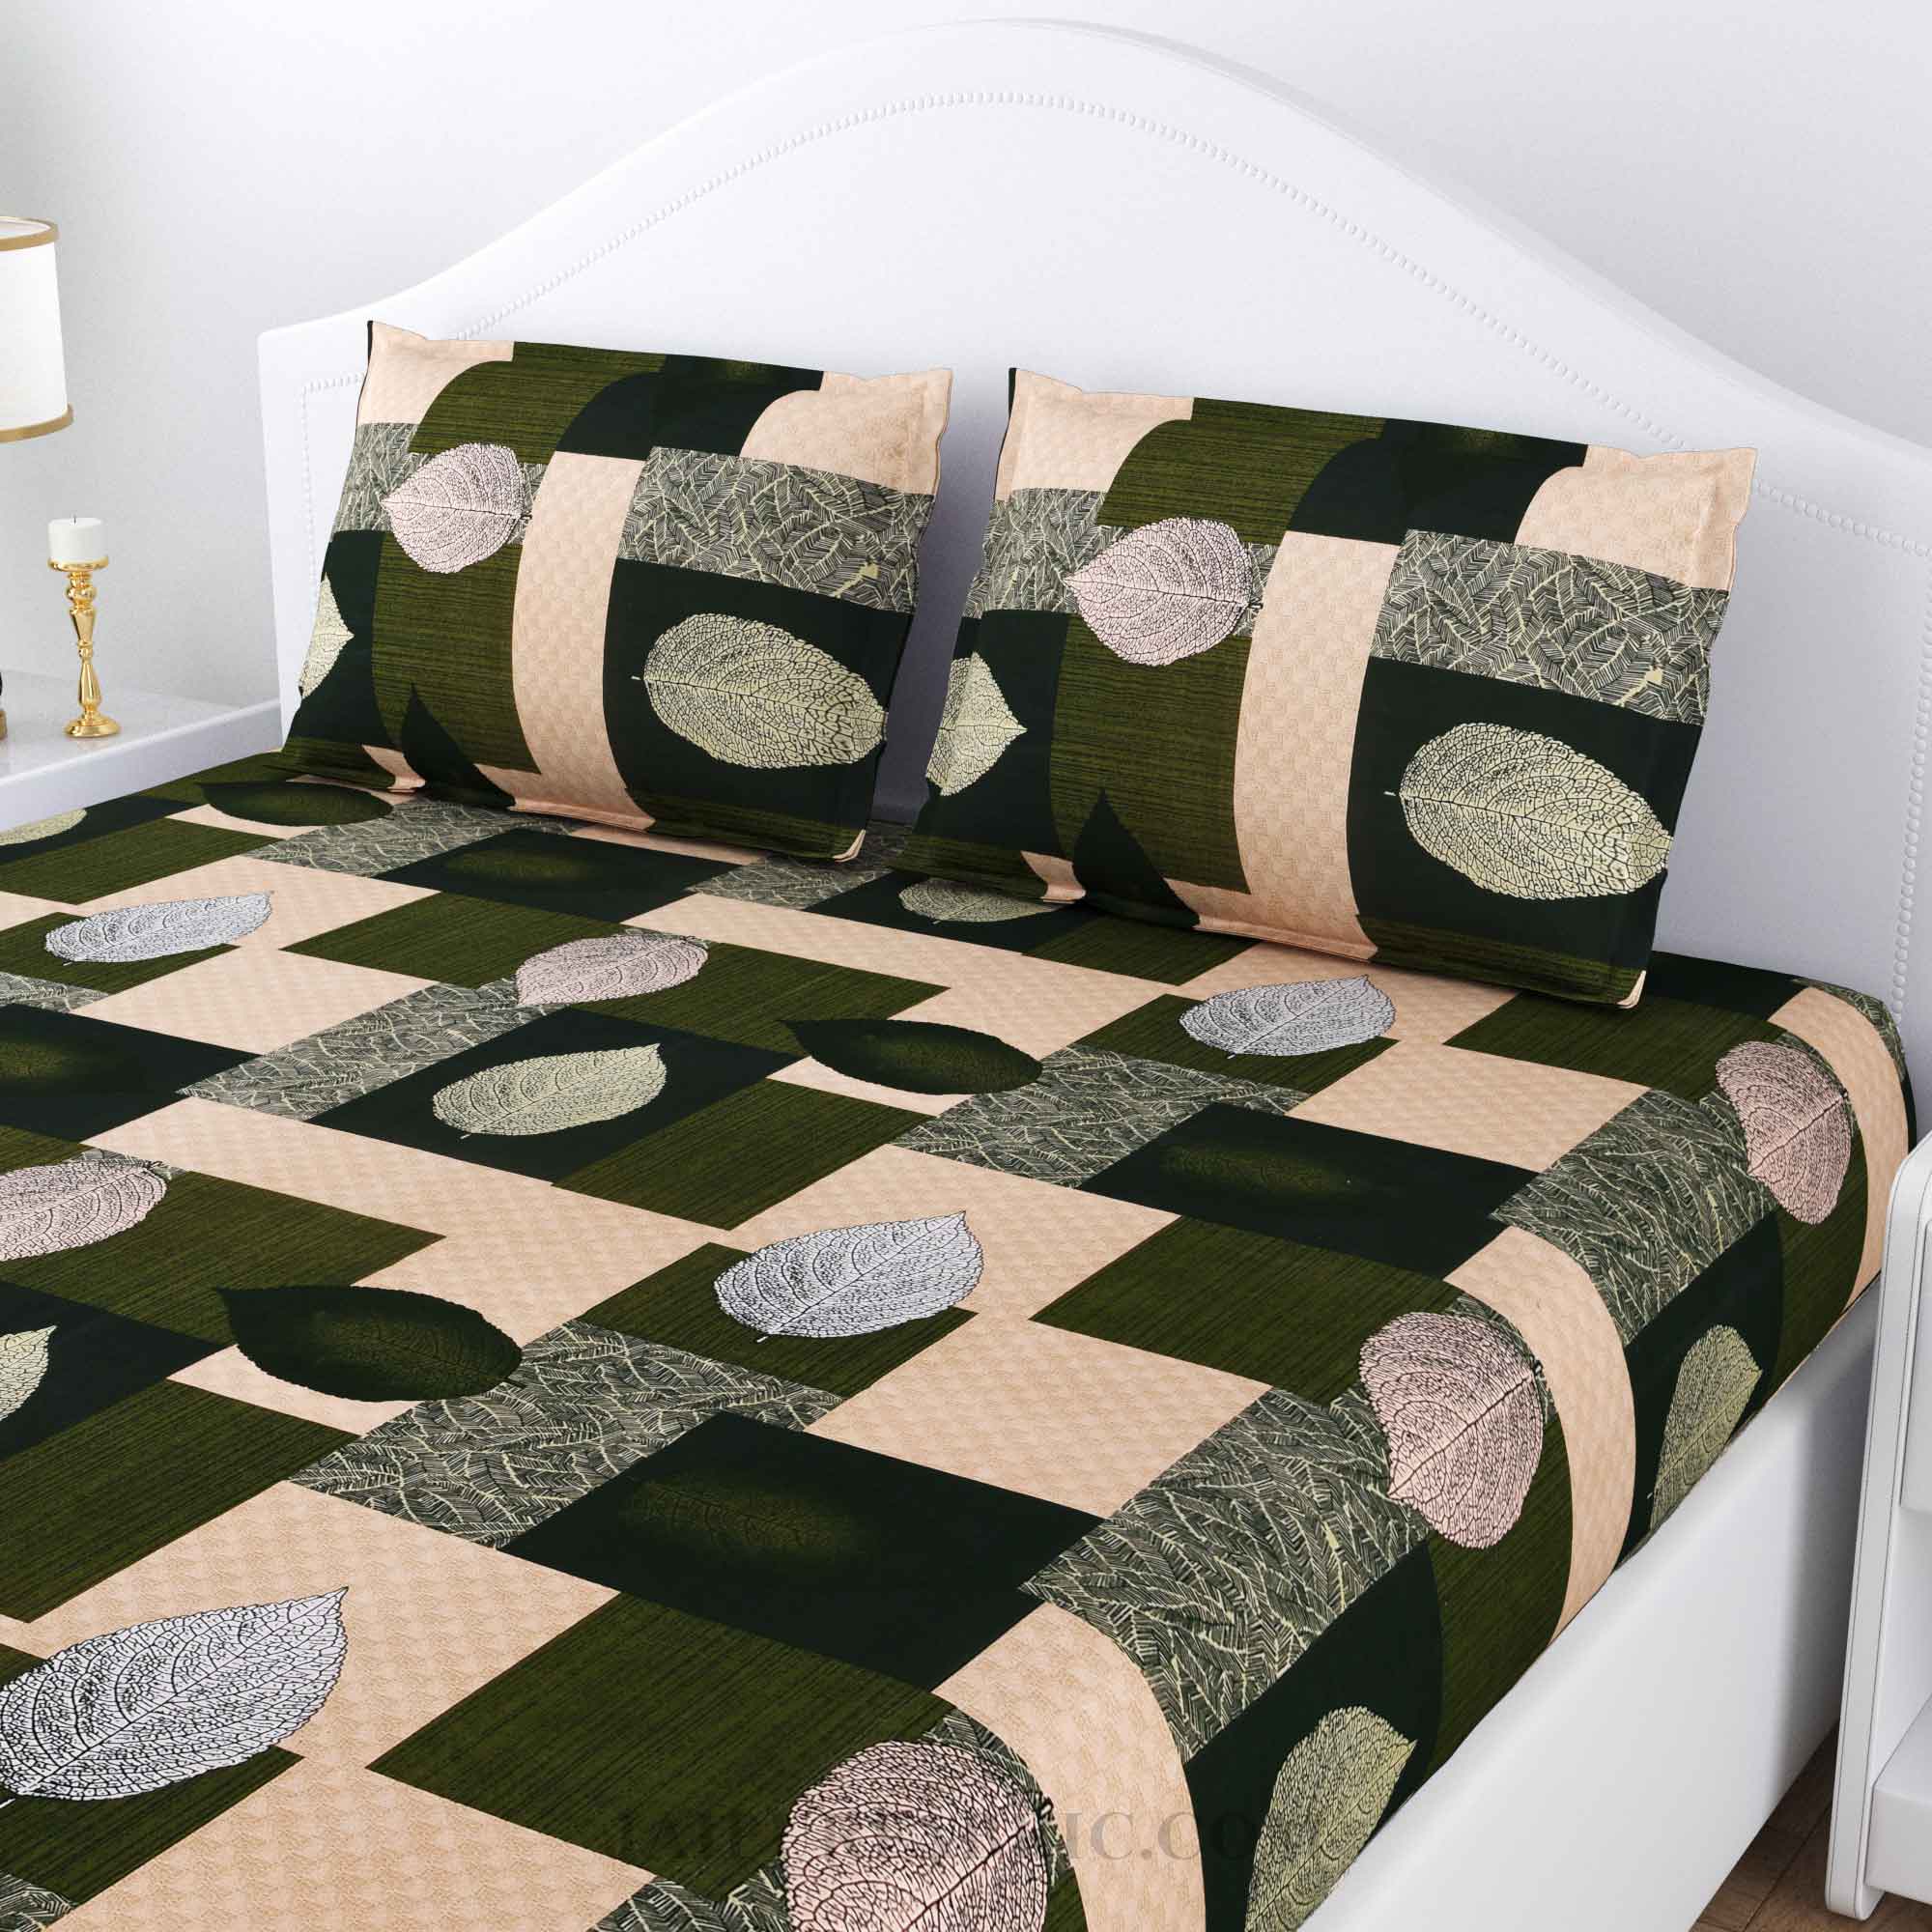 Square Wrap Green Cotton Double Bedsheet